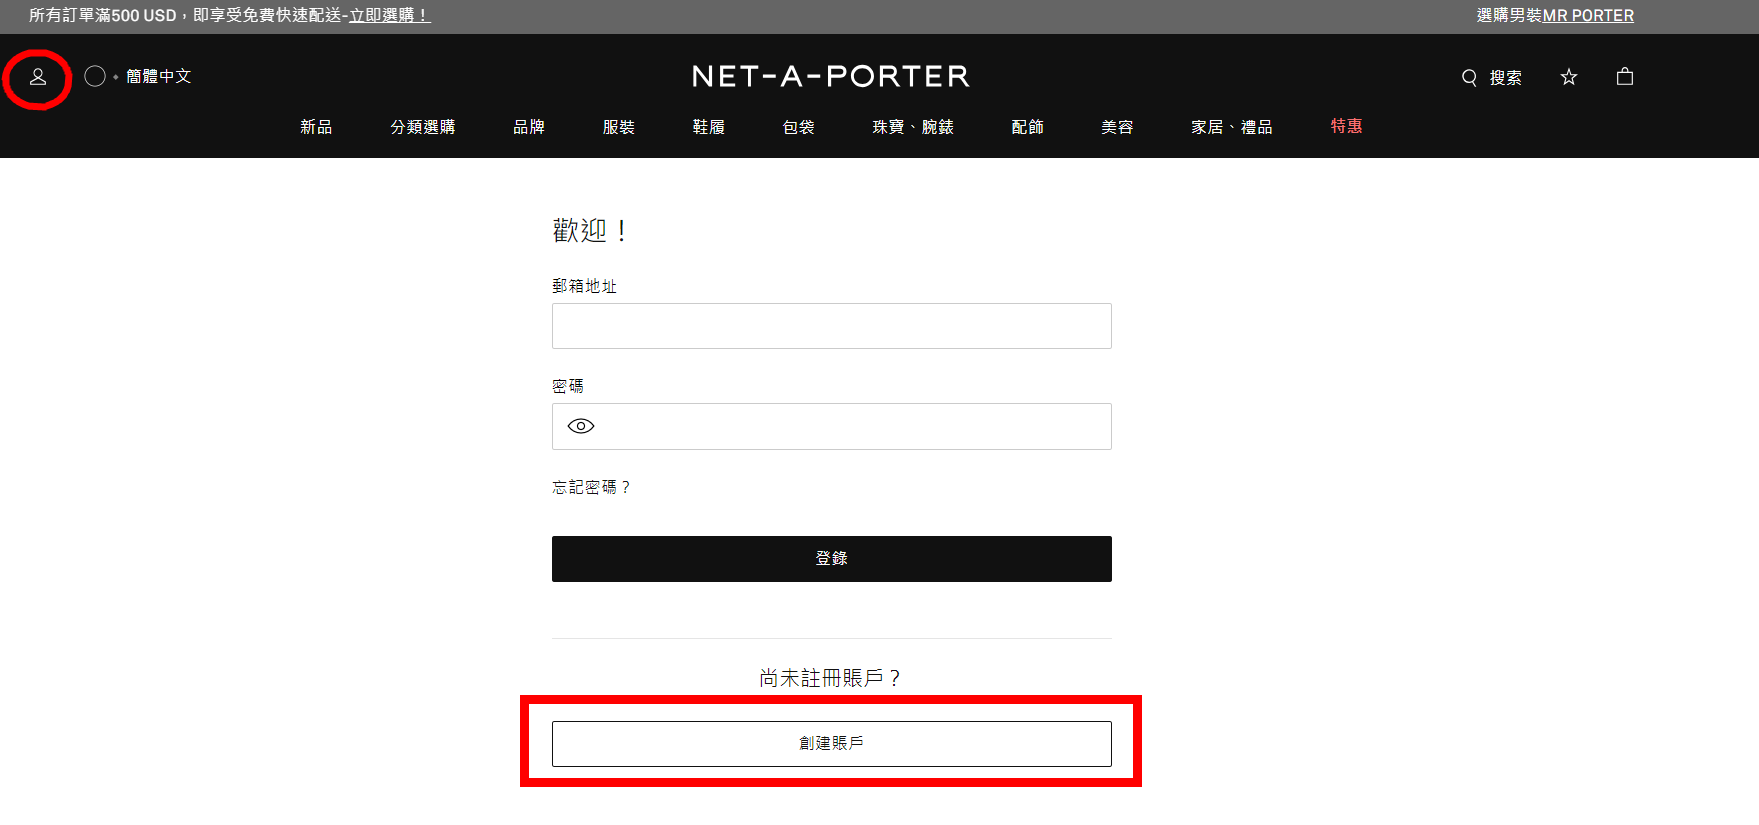 NET-A-PORTER 國外網購好好買 回購戰利品分享 @菲菲吳小姐